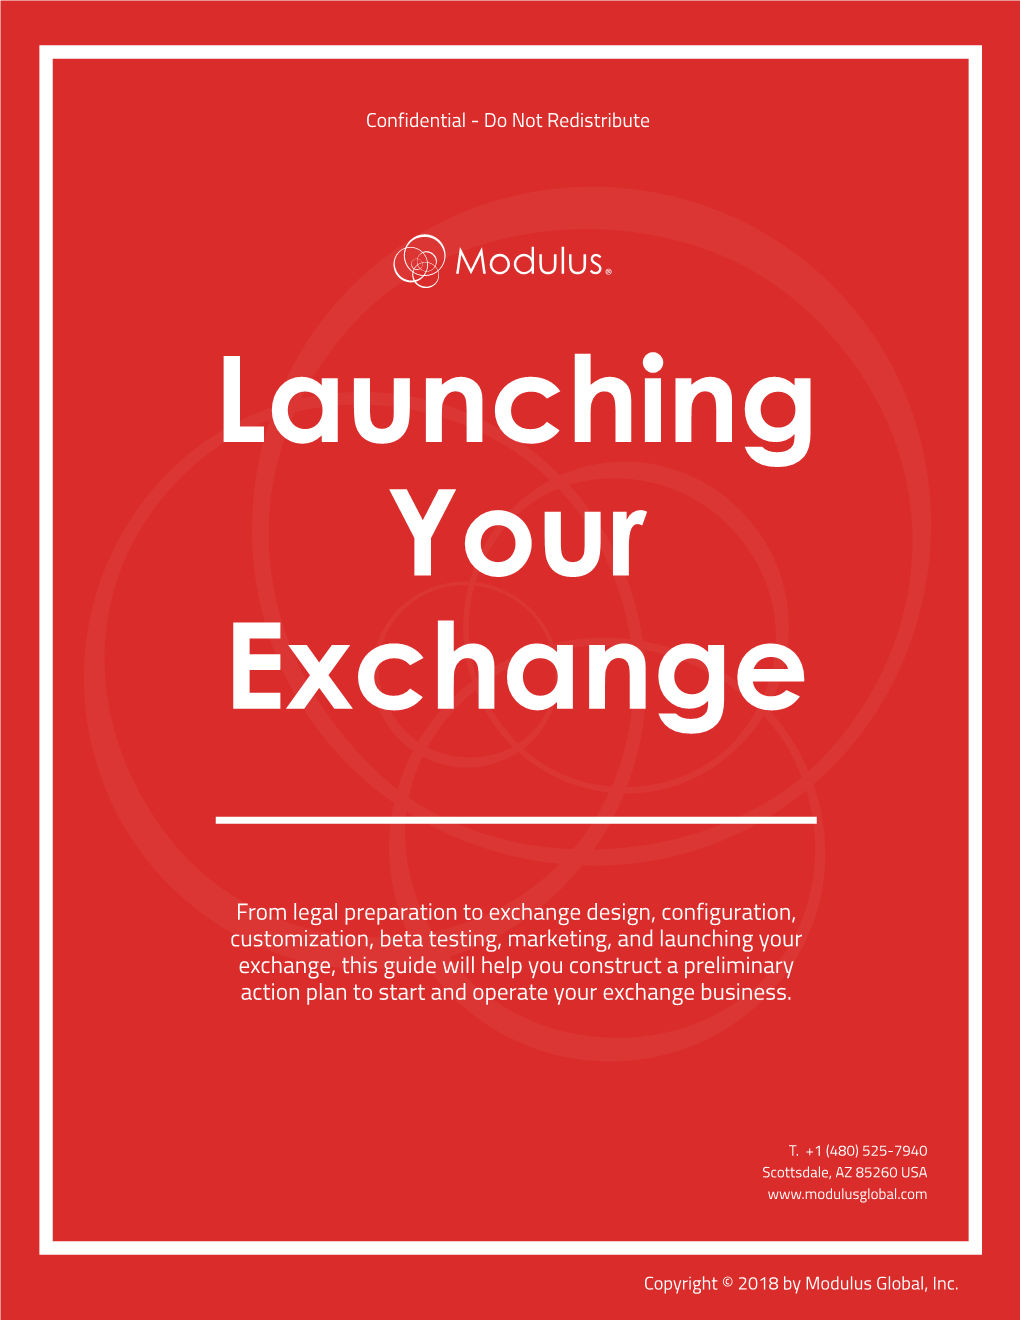 The Modulus Exchange Solution